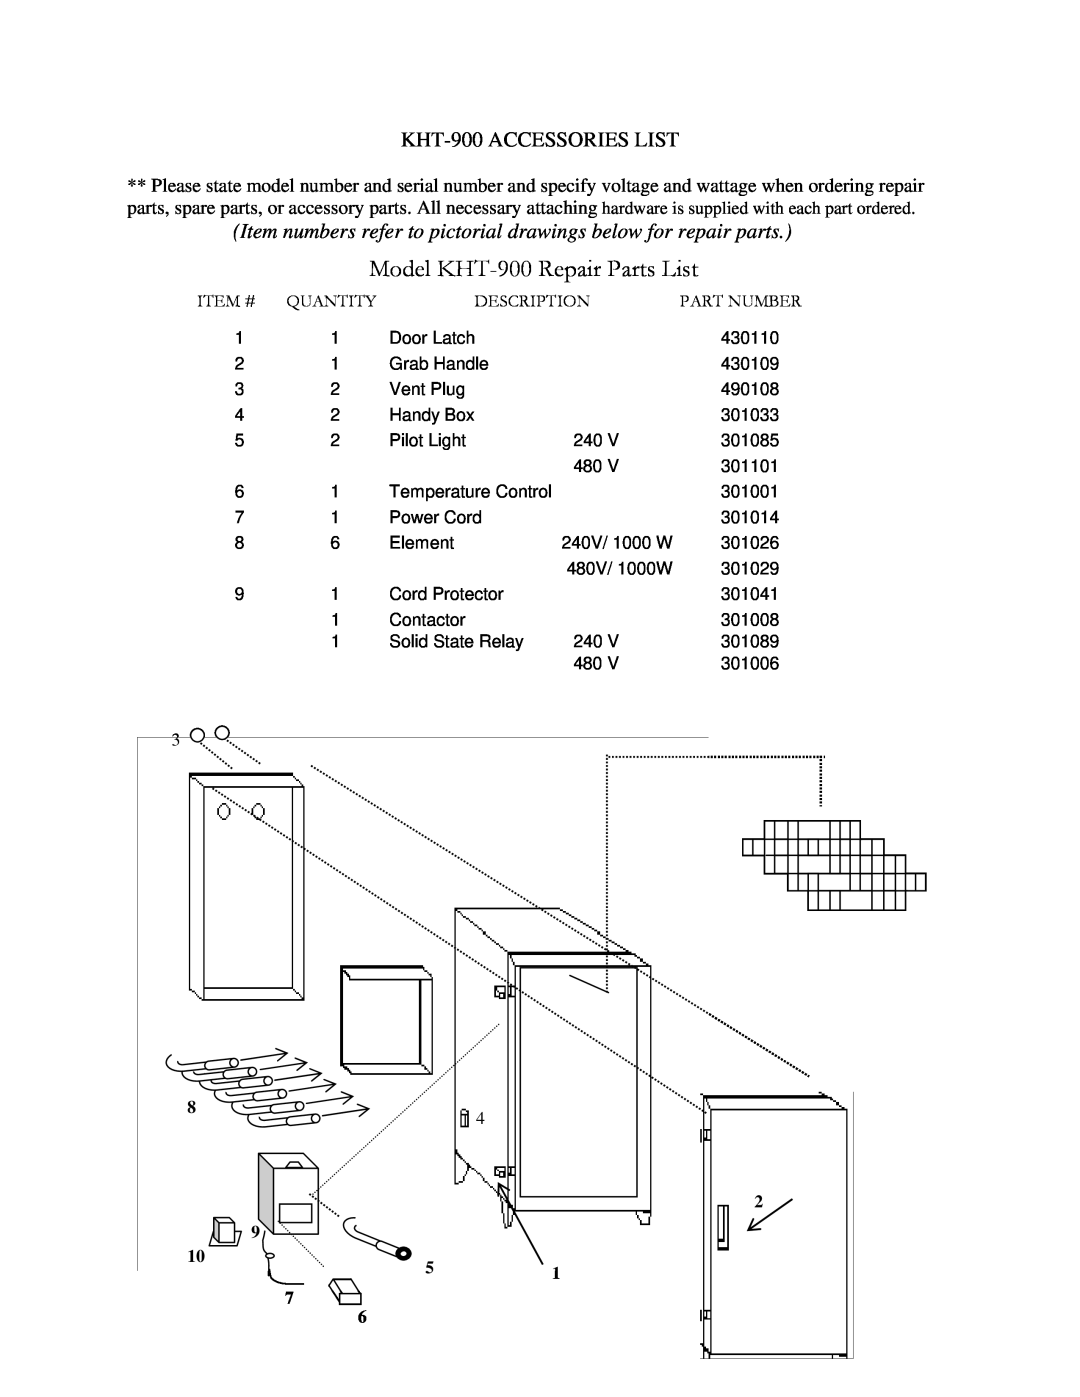 Henkel manual Model KHT-900 Repair Parts List, KHT-900 ACCESSORIES LIST 